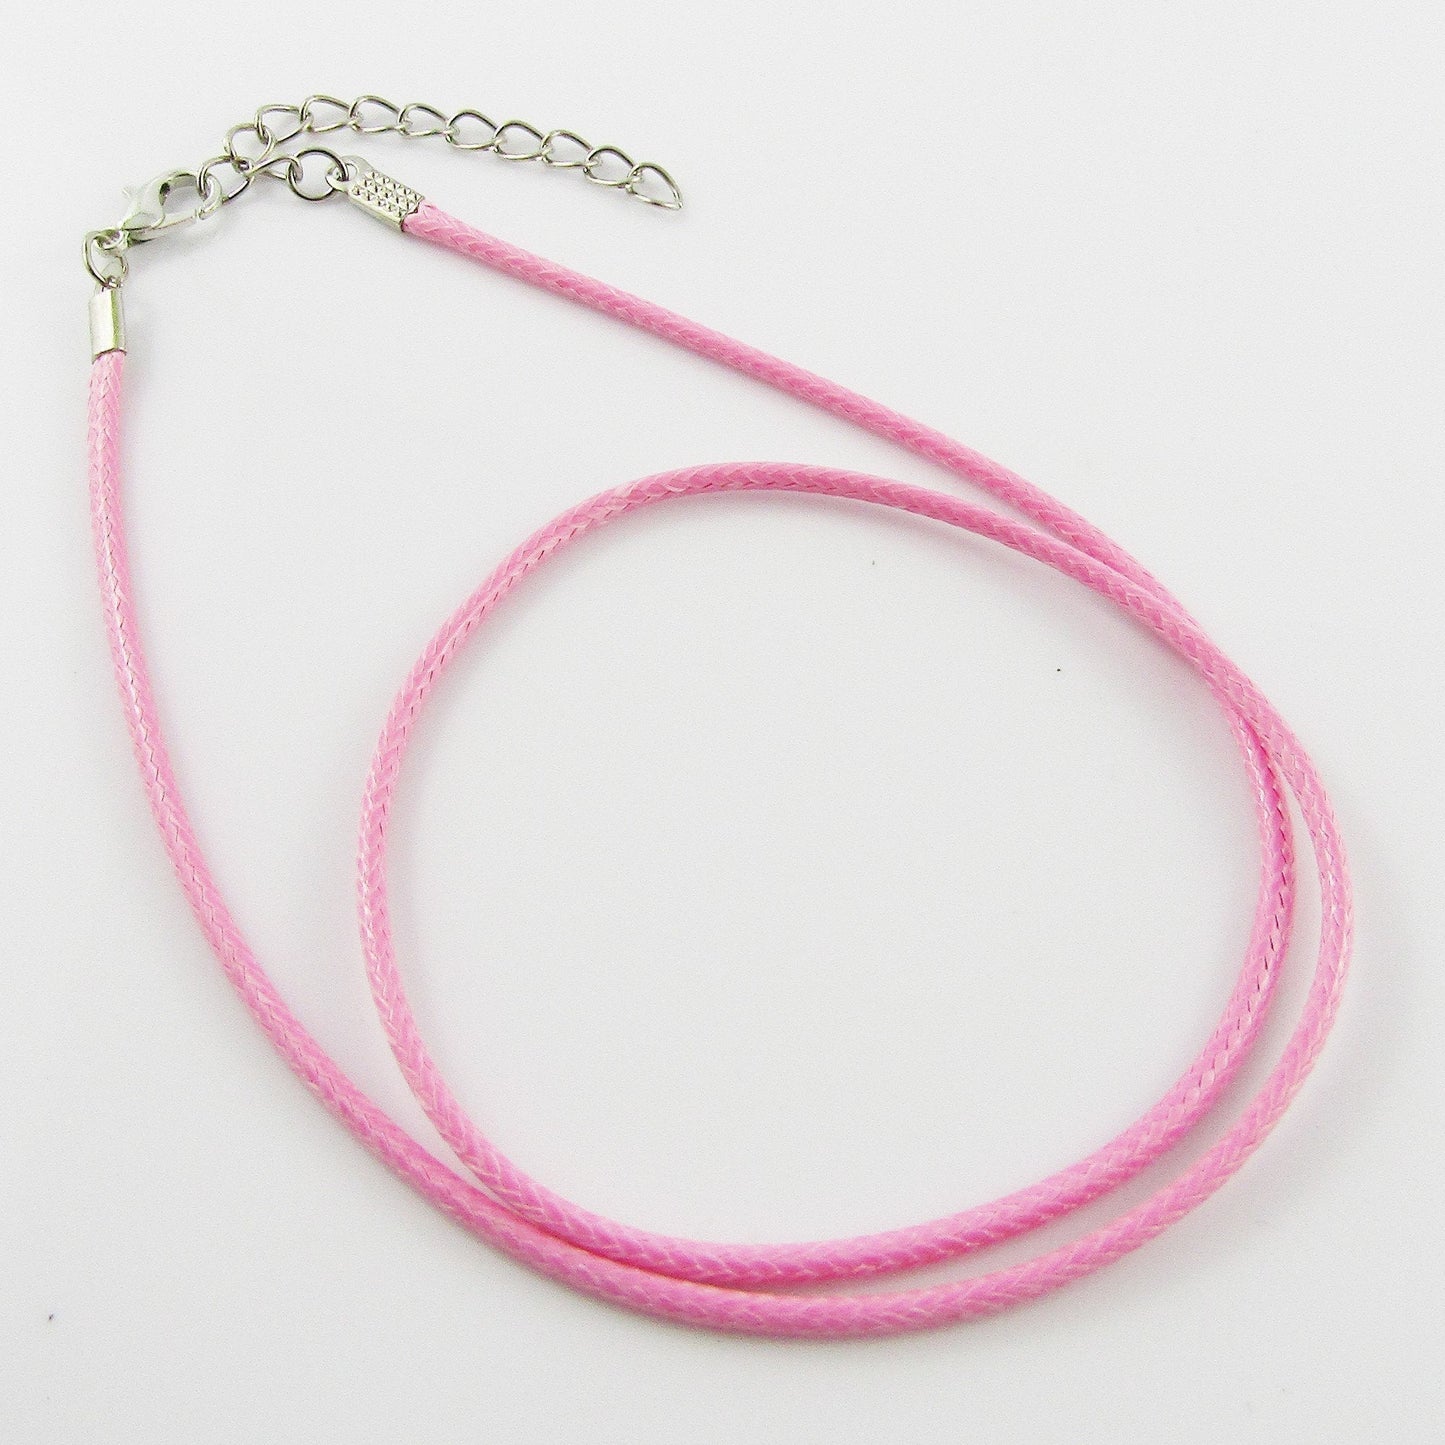 Bulk Pack 10pcs 2mm Pink Cord Necklace 44cm with 5cm Extender